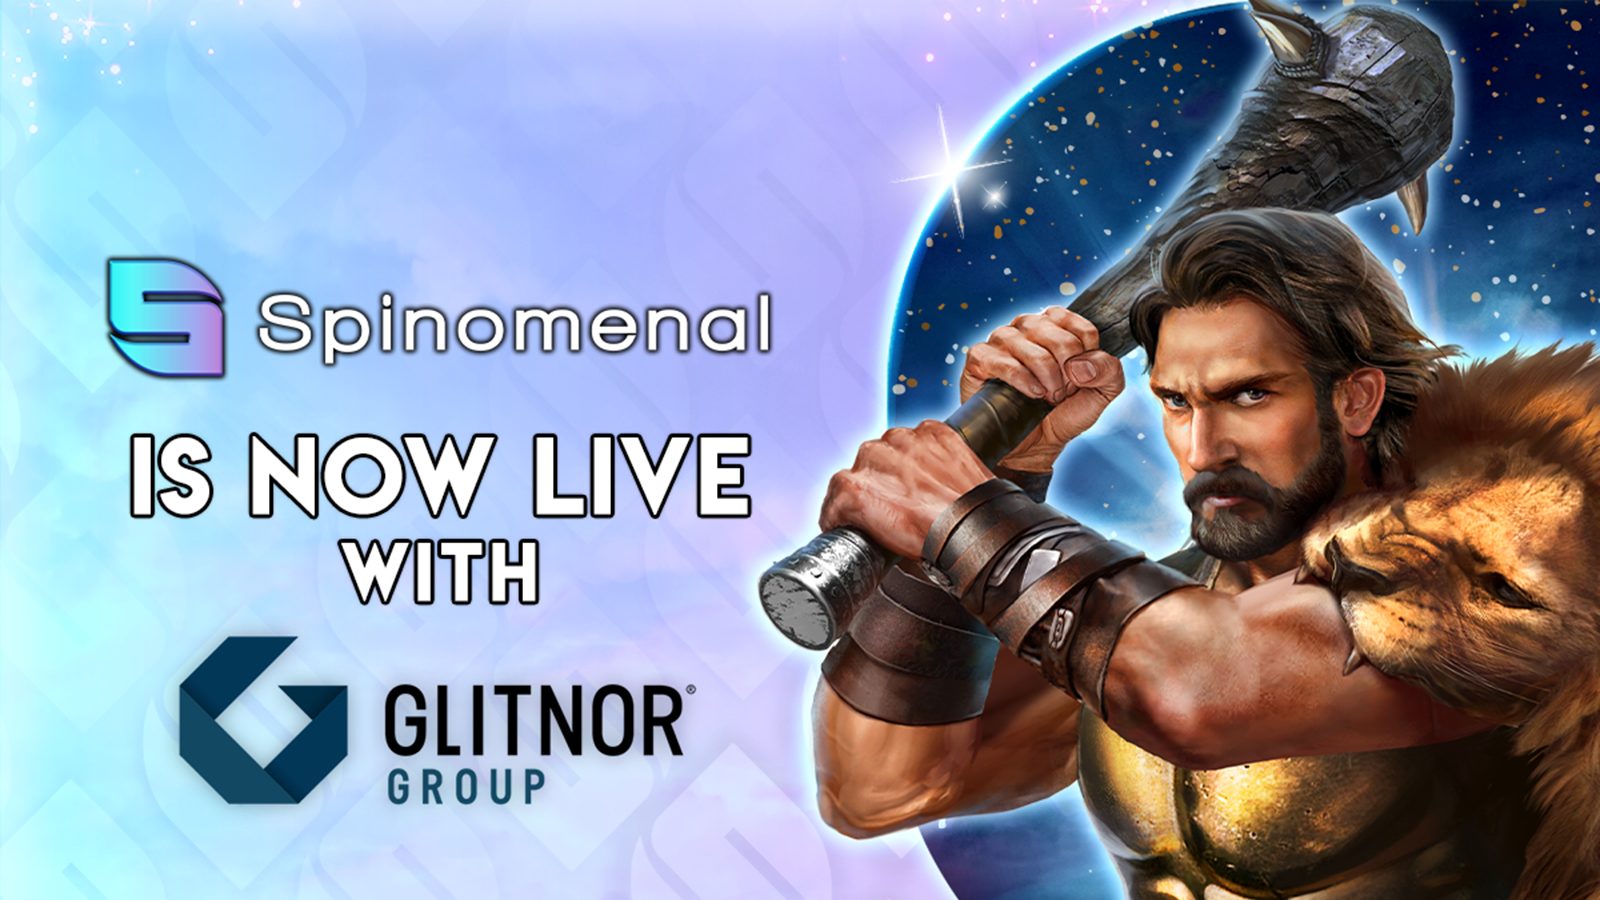 Spinomenal Partnership with Glitnor Group